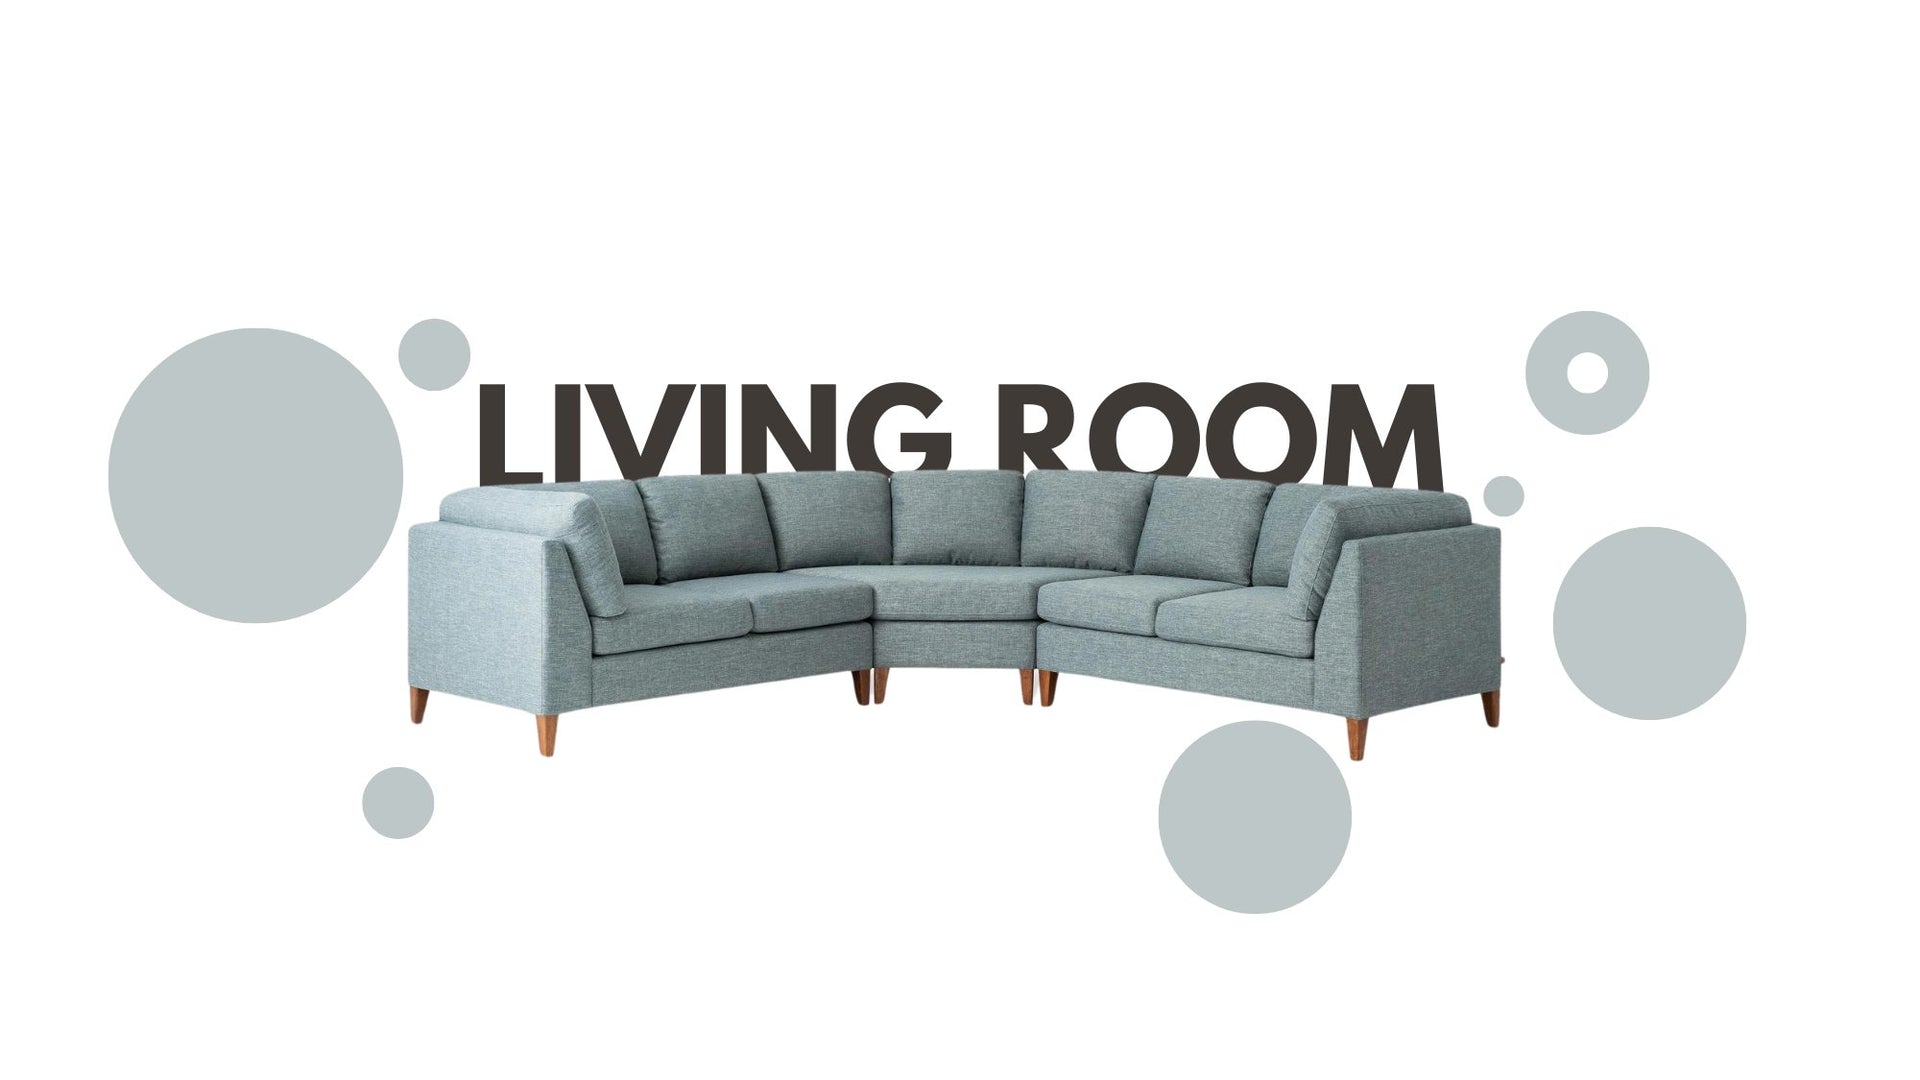 Living rooms at studio y design